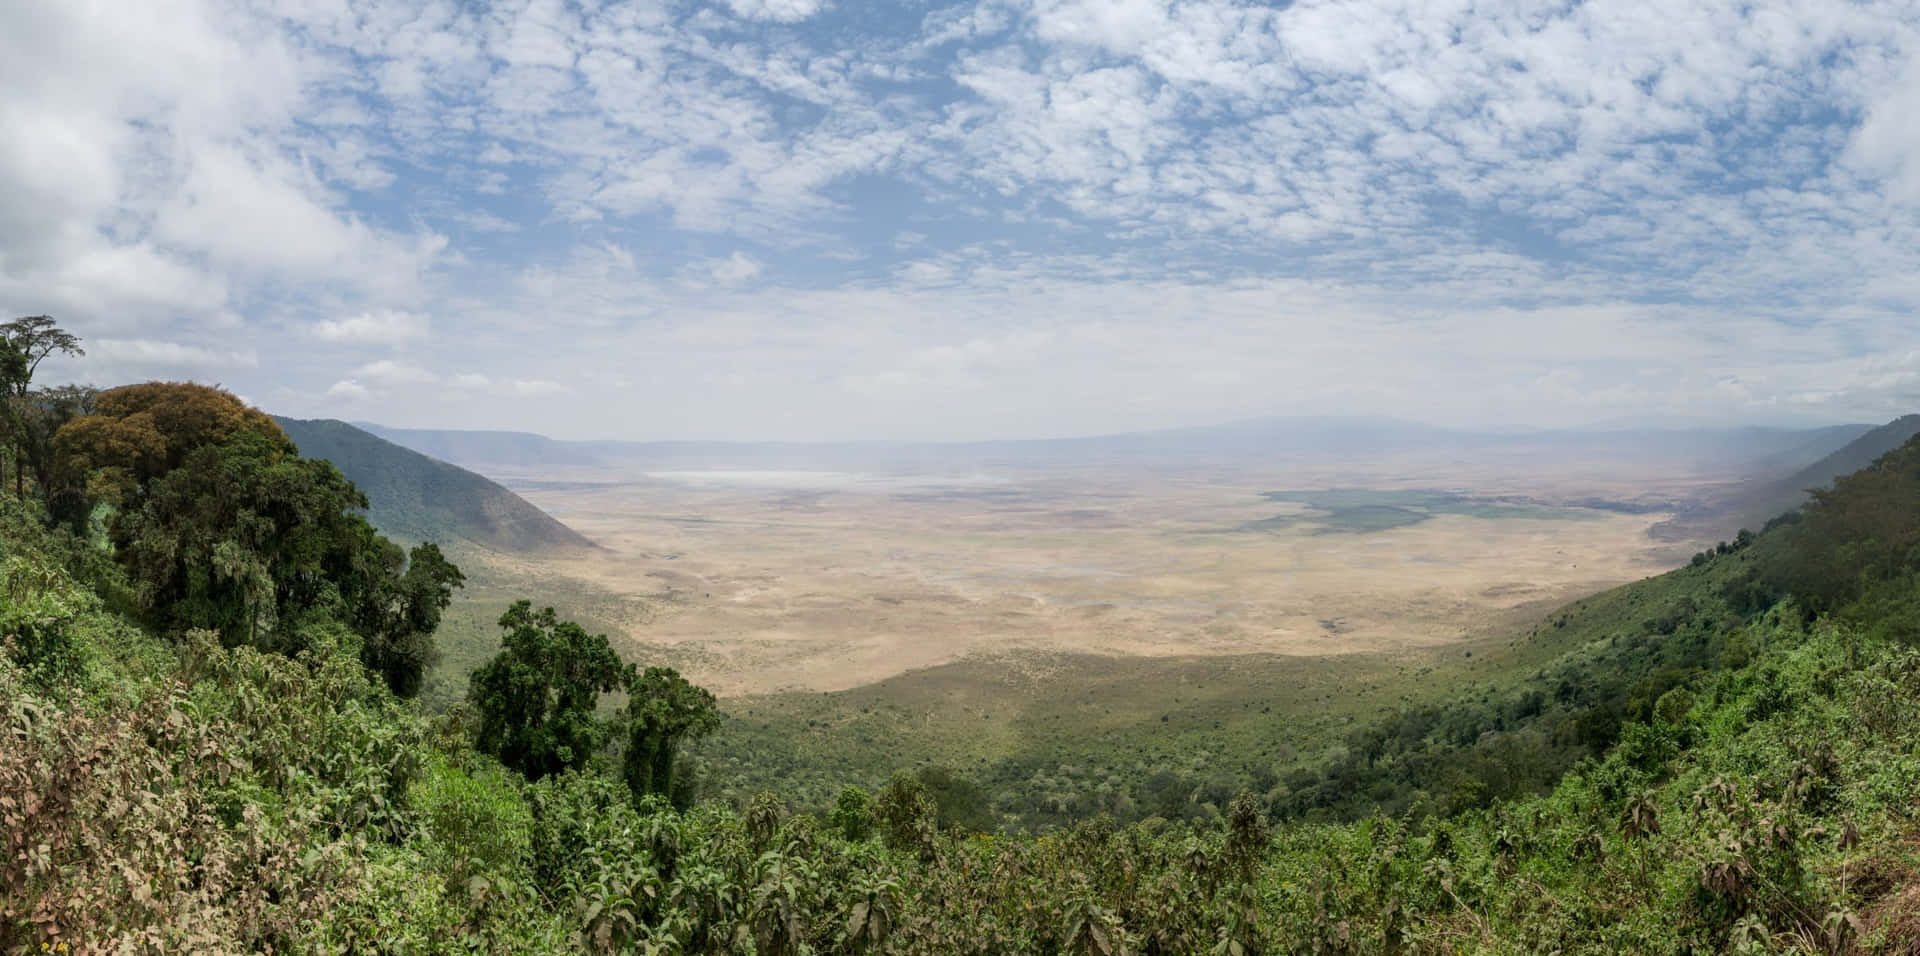 Tanzania Large Volcanic Caldera Ngorongoro Crater Scenery Wallpaper